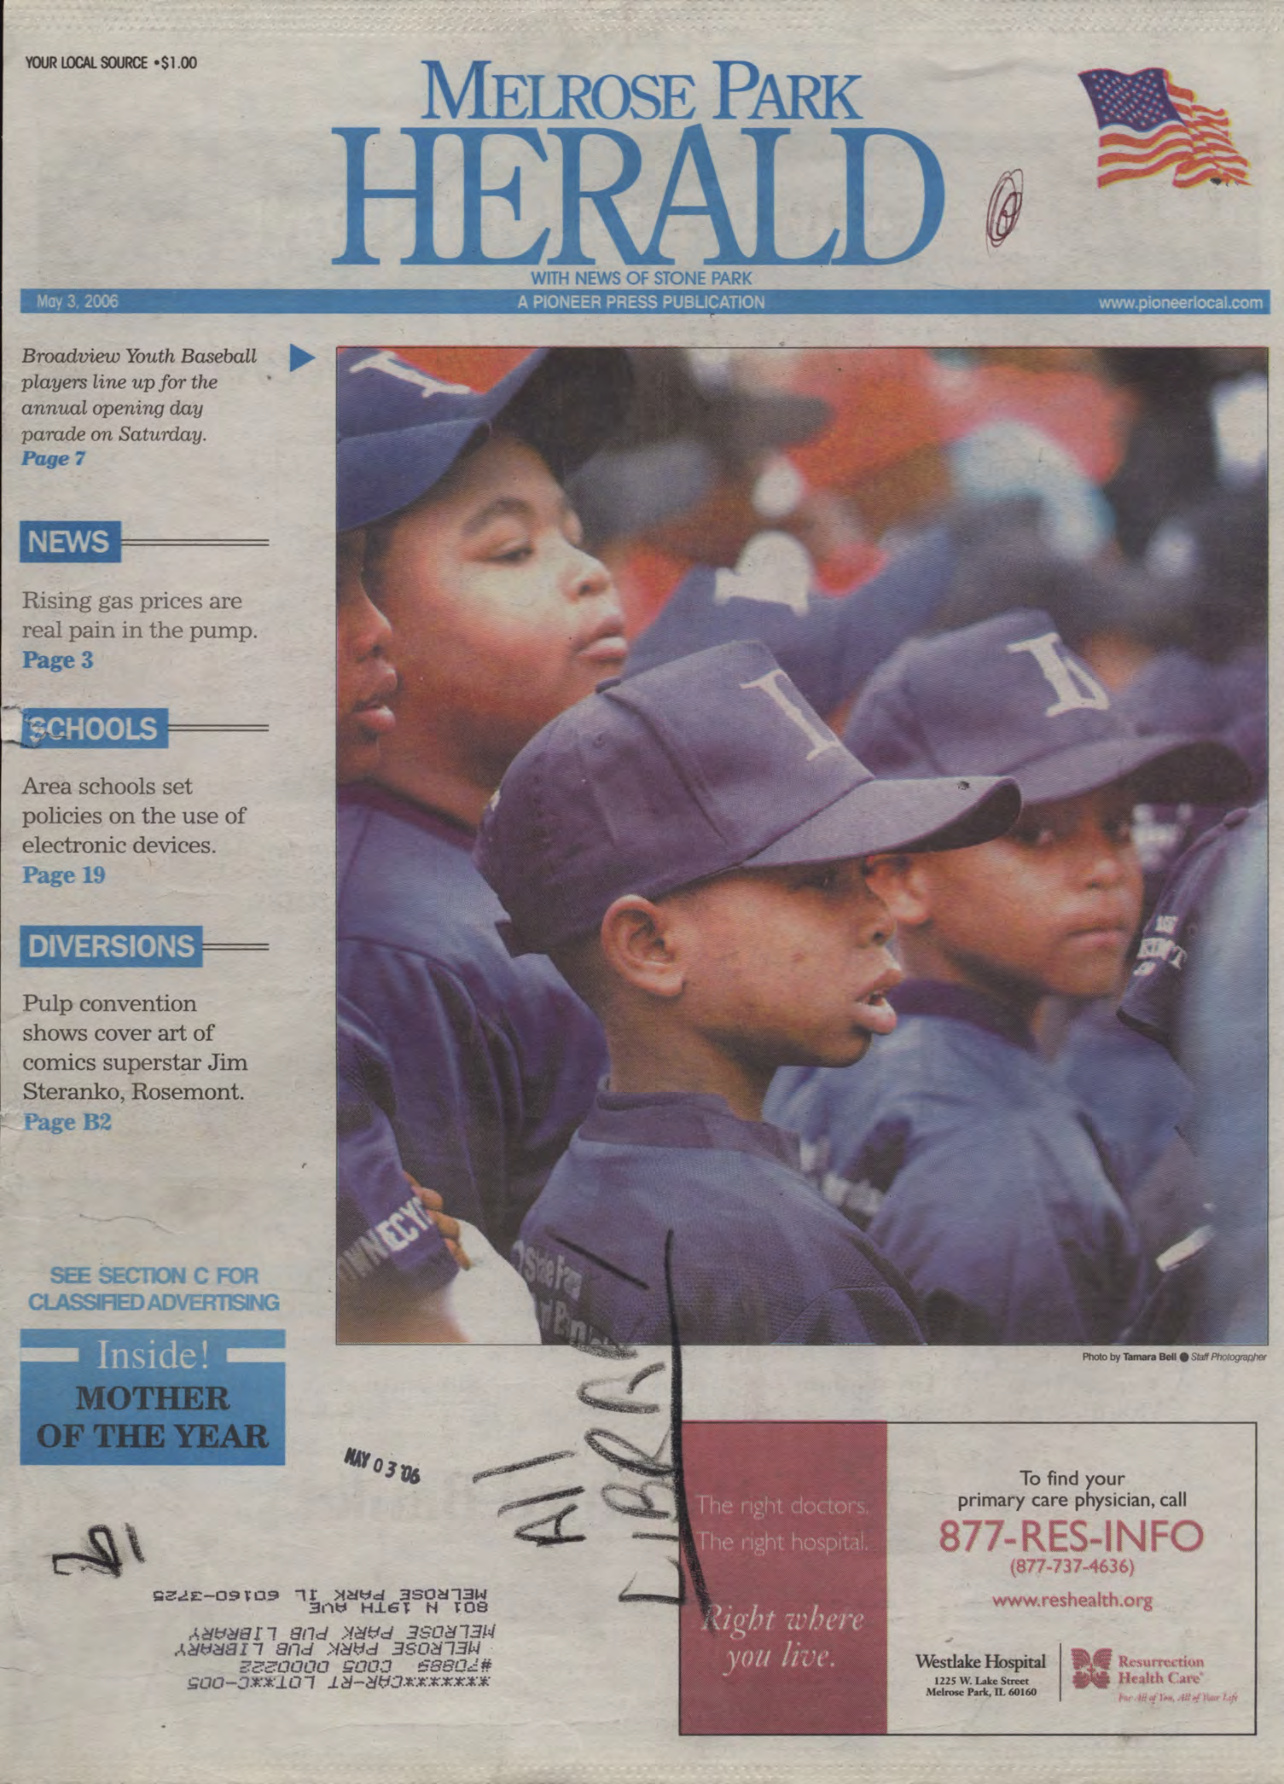 The Herald – 20060503